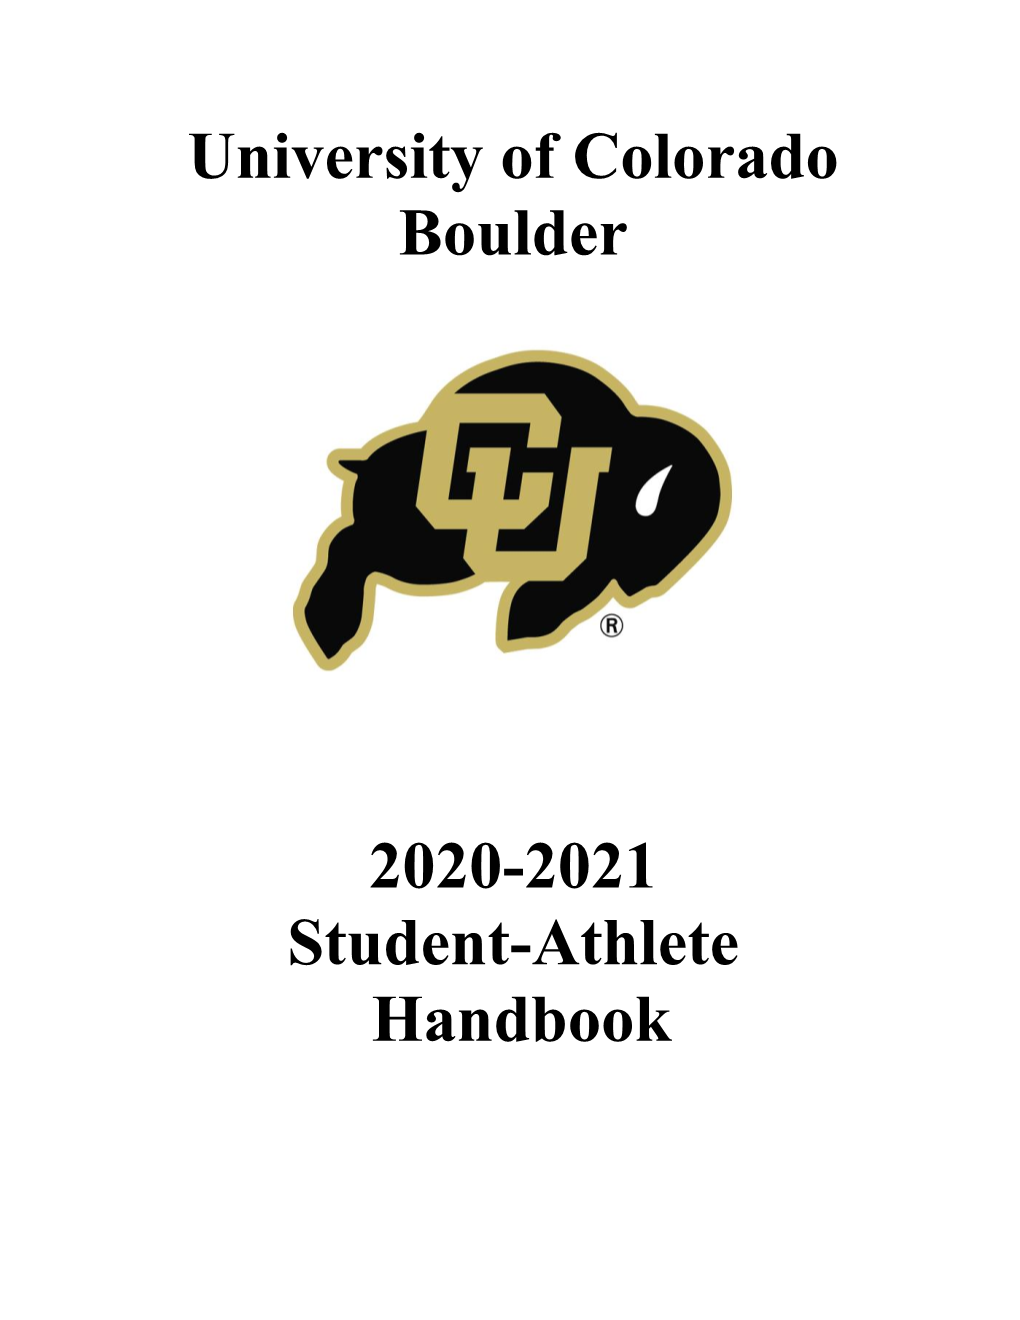 University of Colorado Boulder 2020-2021 Student-Athlete Handbook